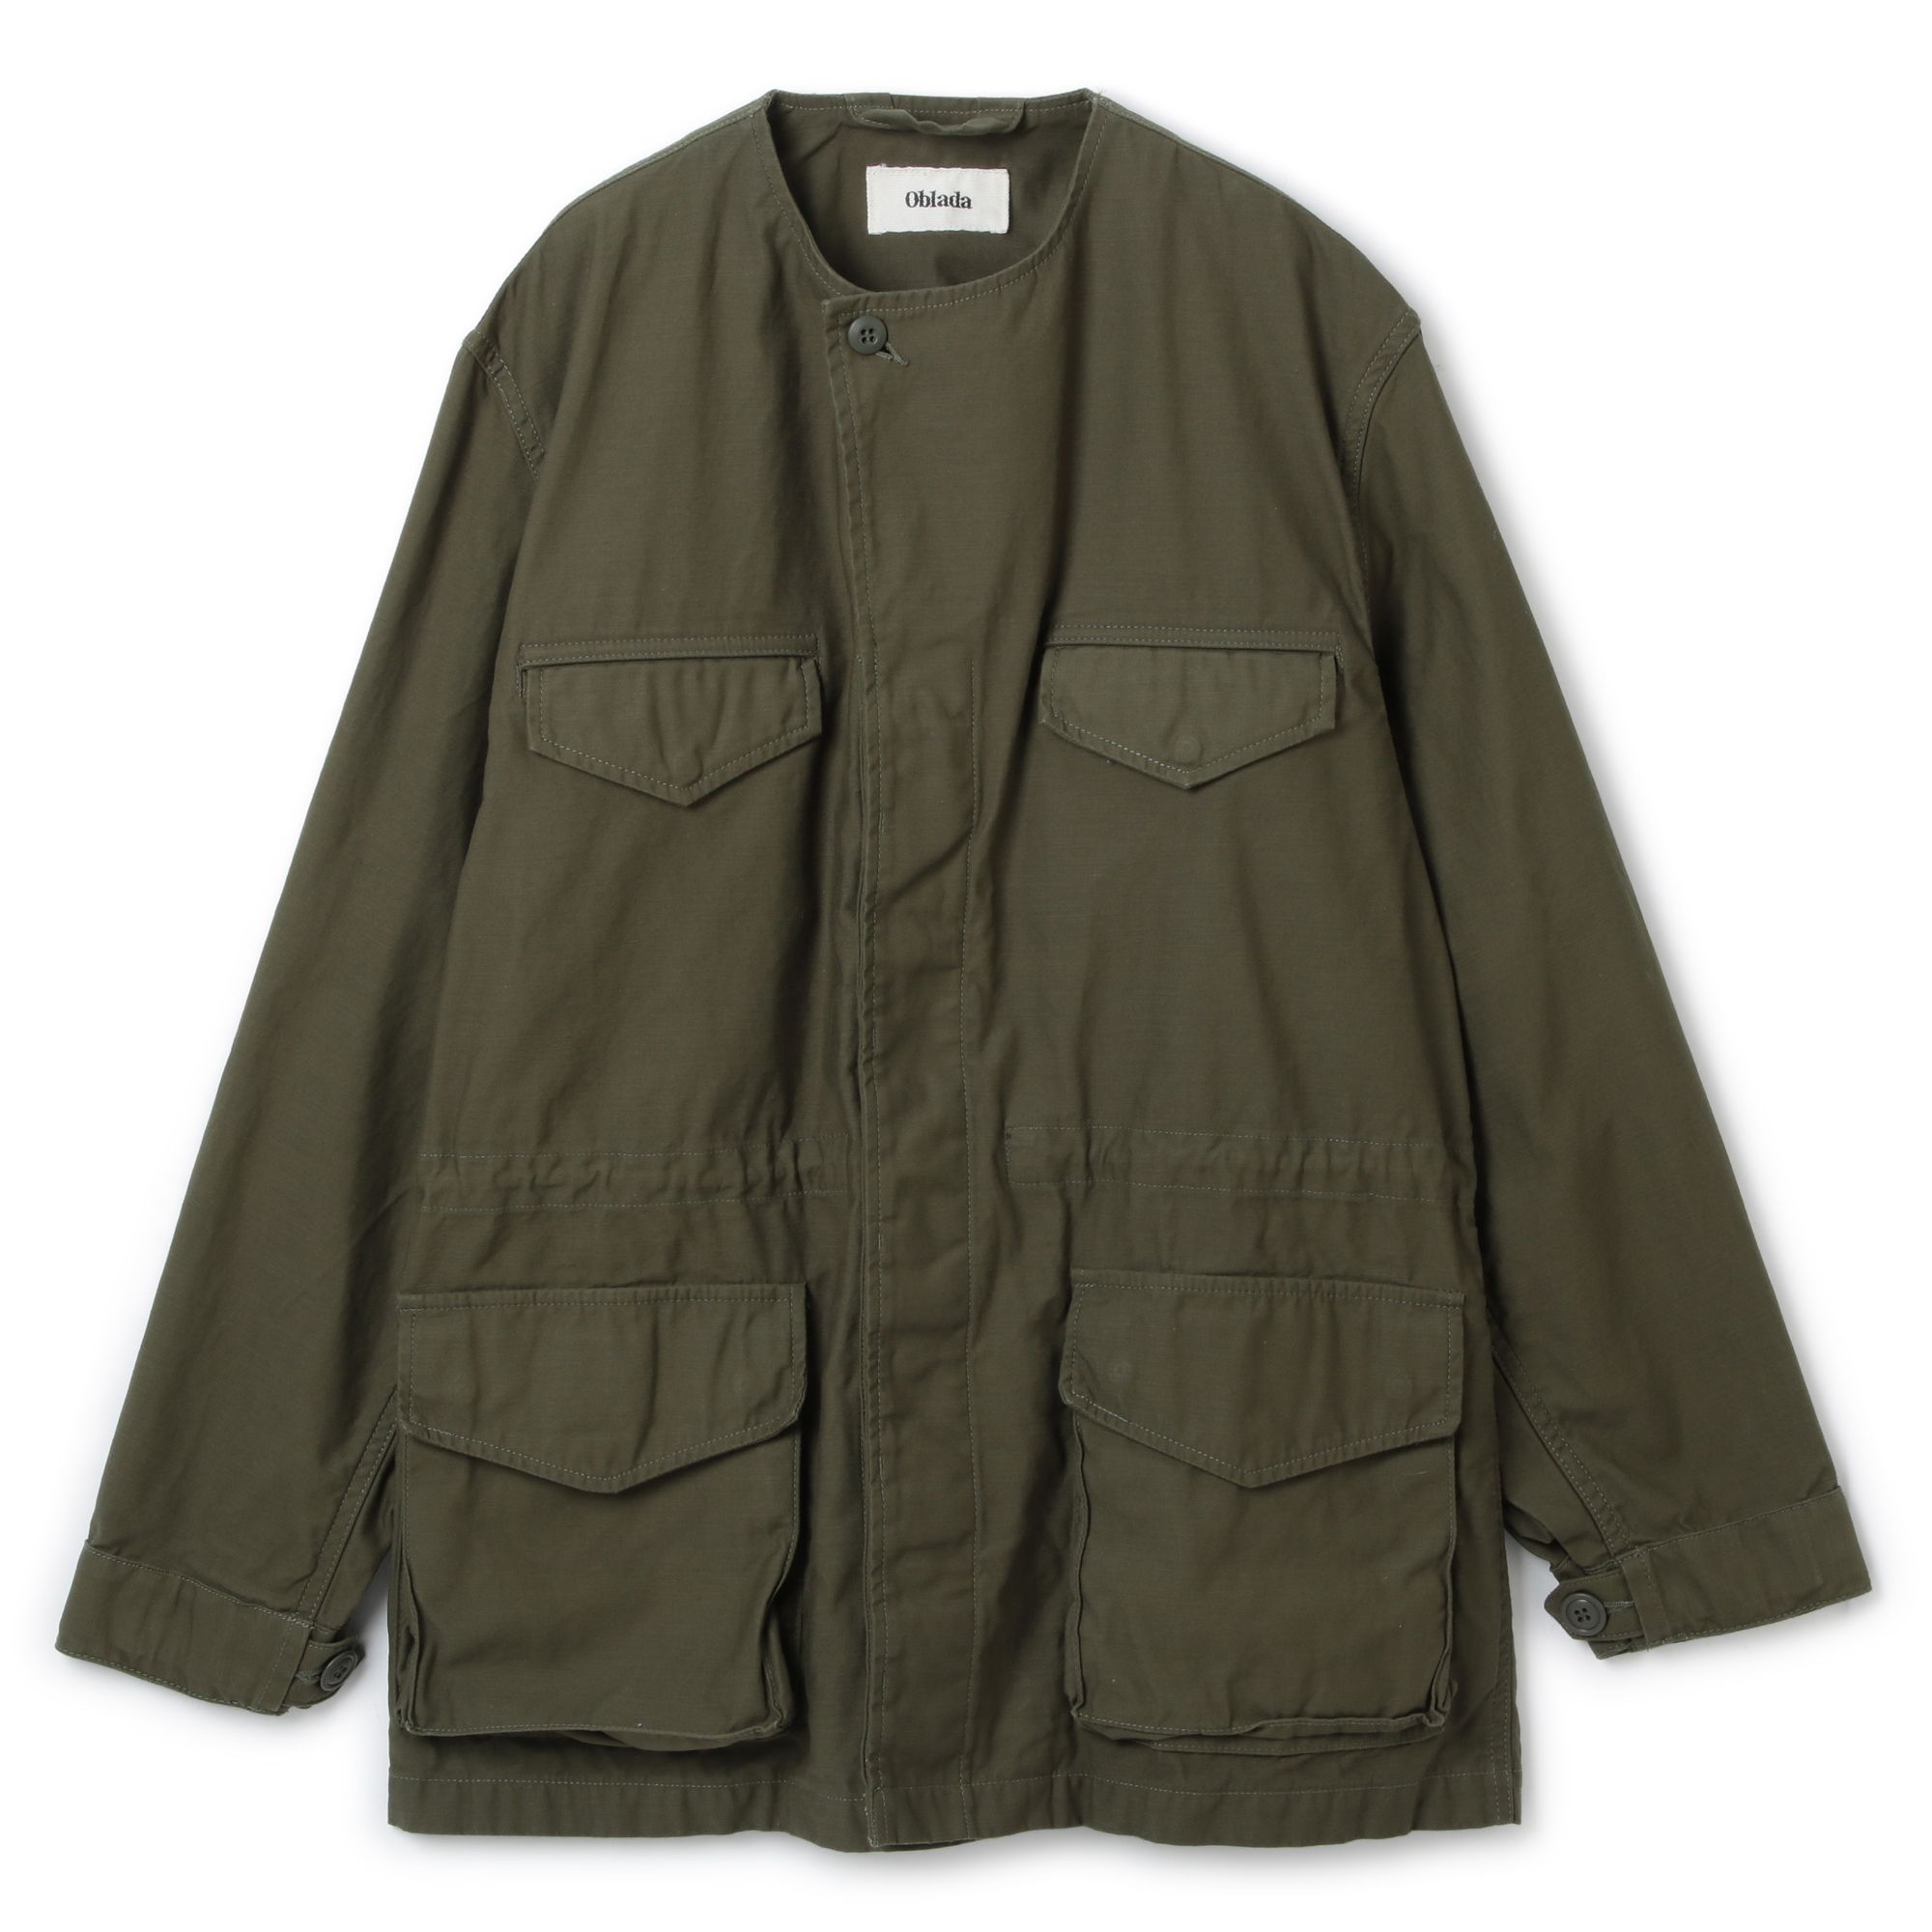  Oblada(オブラダ)/Washed Military Jacket